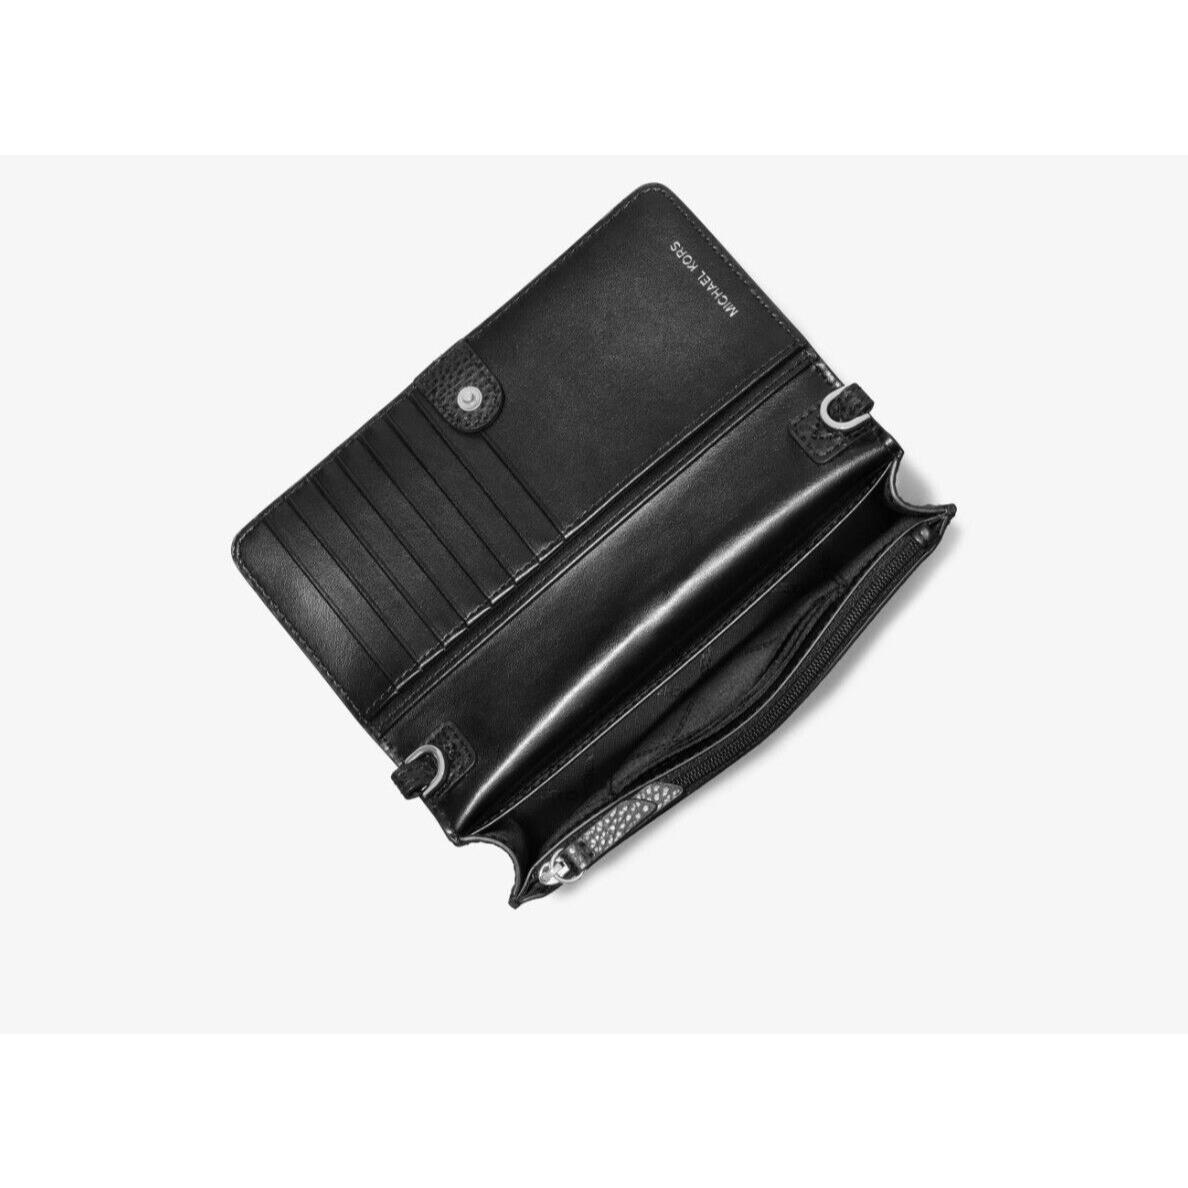 Michael Kors  bag   - Black Handle/Strap, Silver Hardware, Black Exterior 6